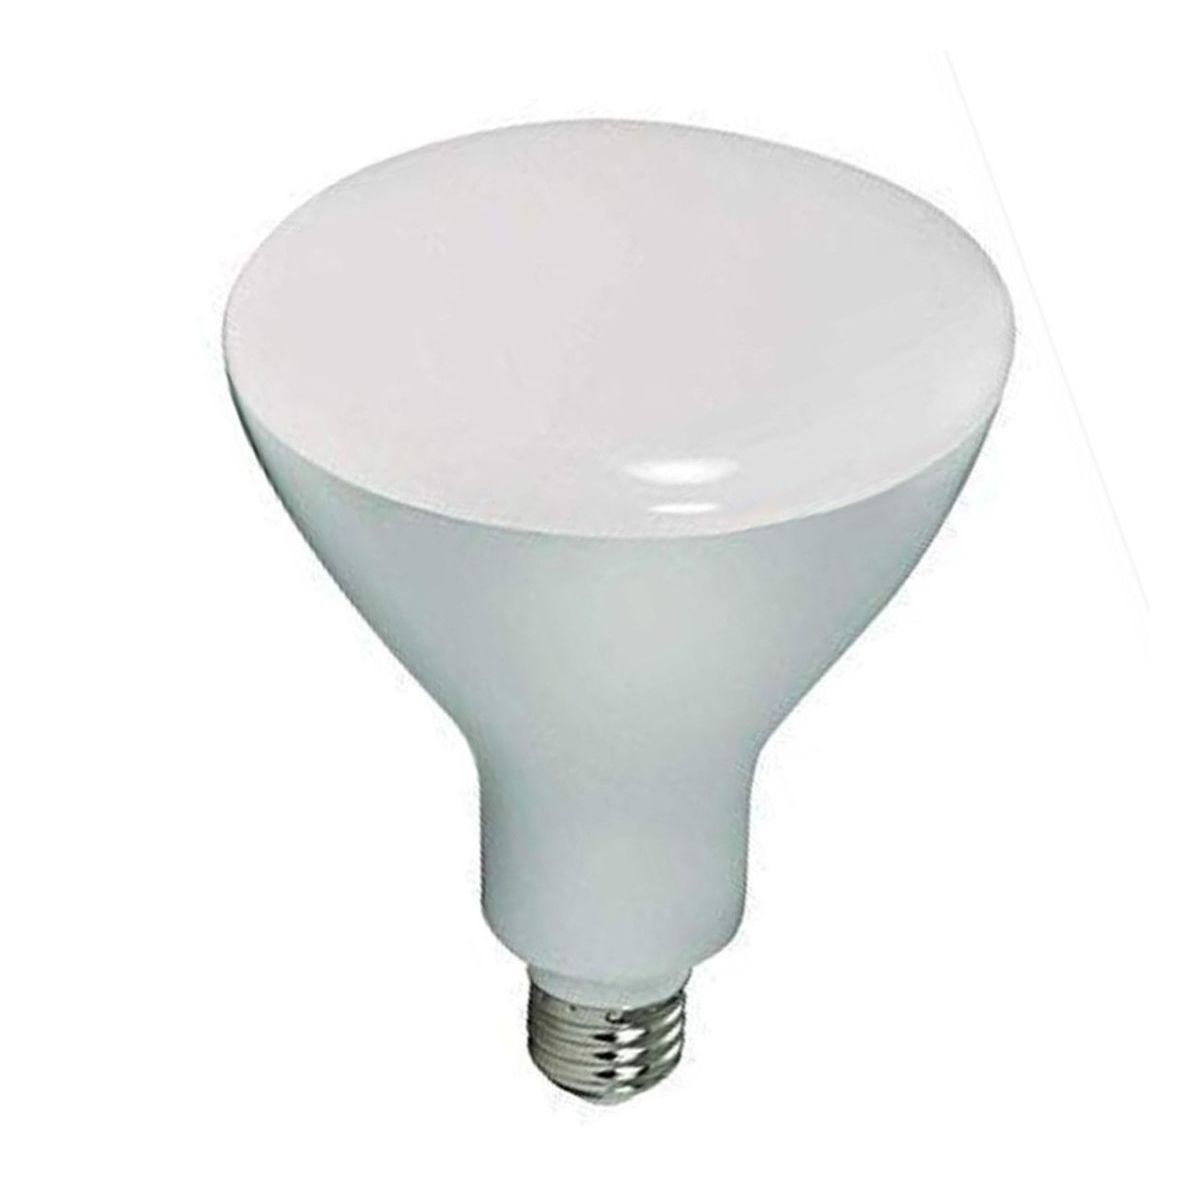 LED R40/BR40 Reflector bulb, 17 watt, 1075 Lumens, 3000K, E26 Medium Base, 105 Deg. Flood, Dimmable